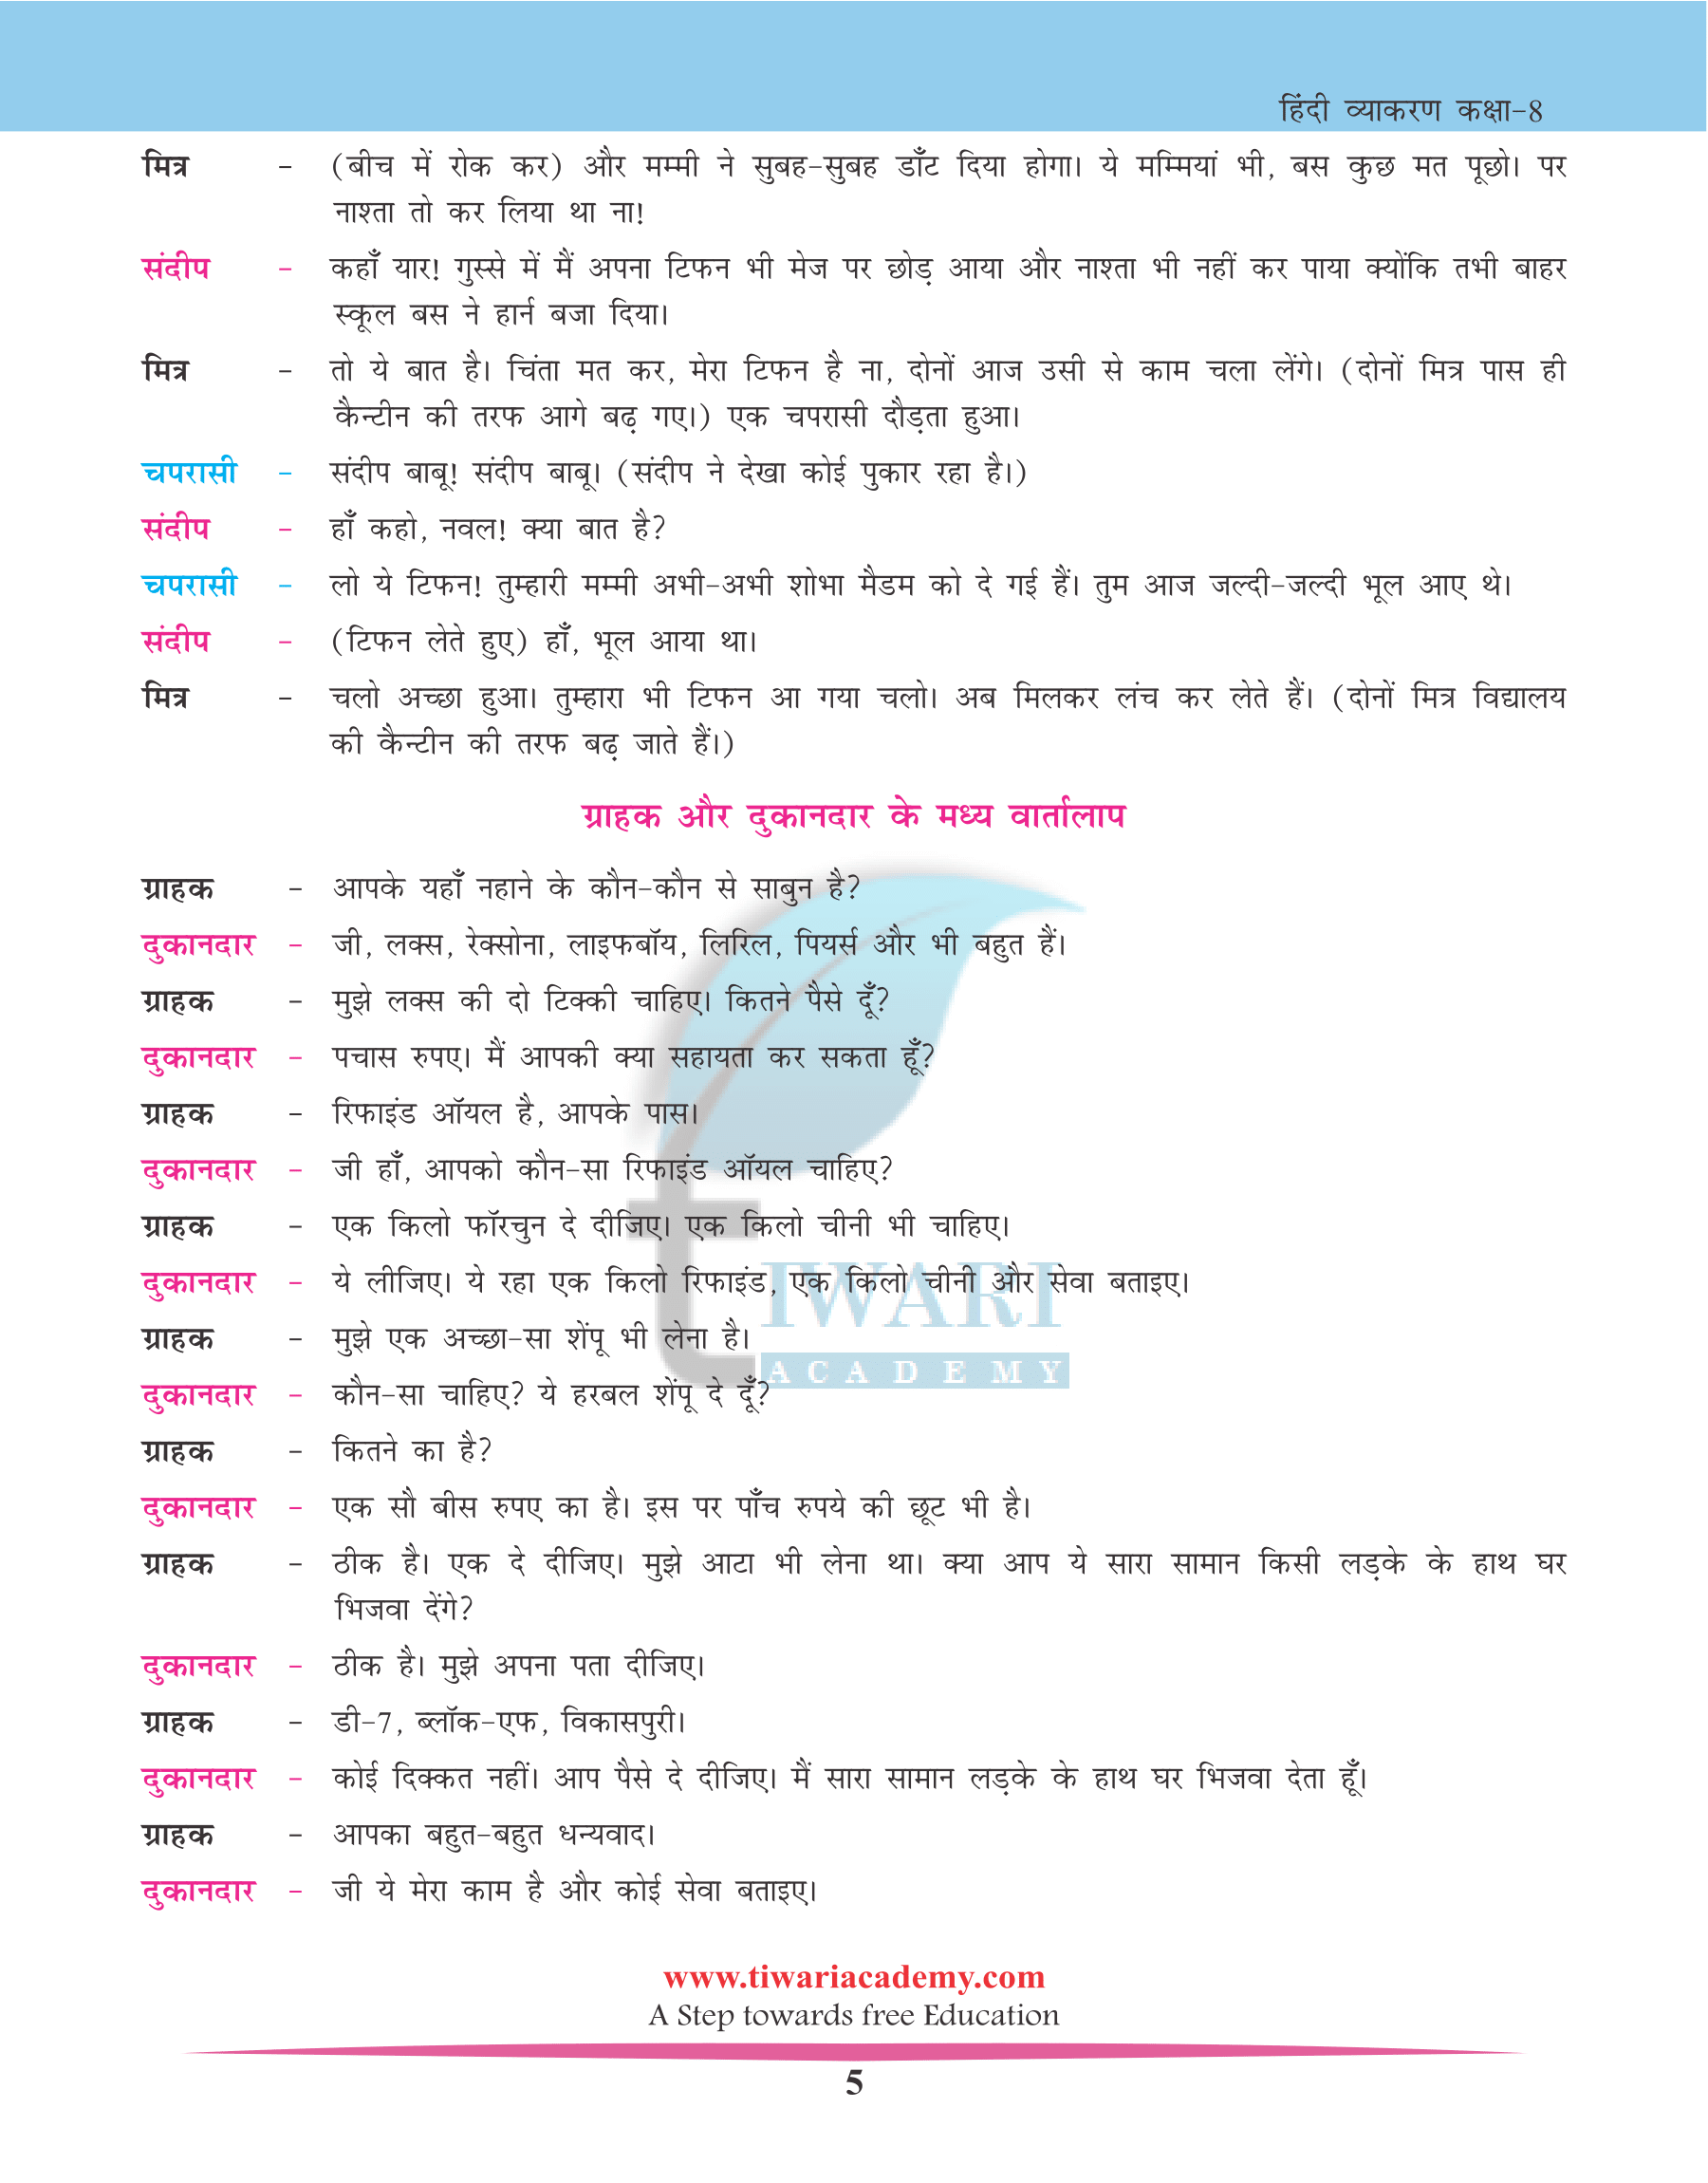 NCERT Solutions for Class 8 Hindi Grammar Chapter 24 मौखिक अभिव्यक्ति